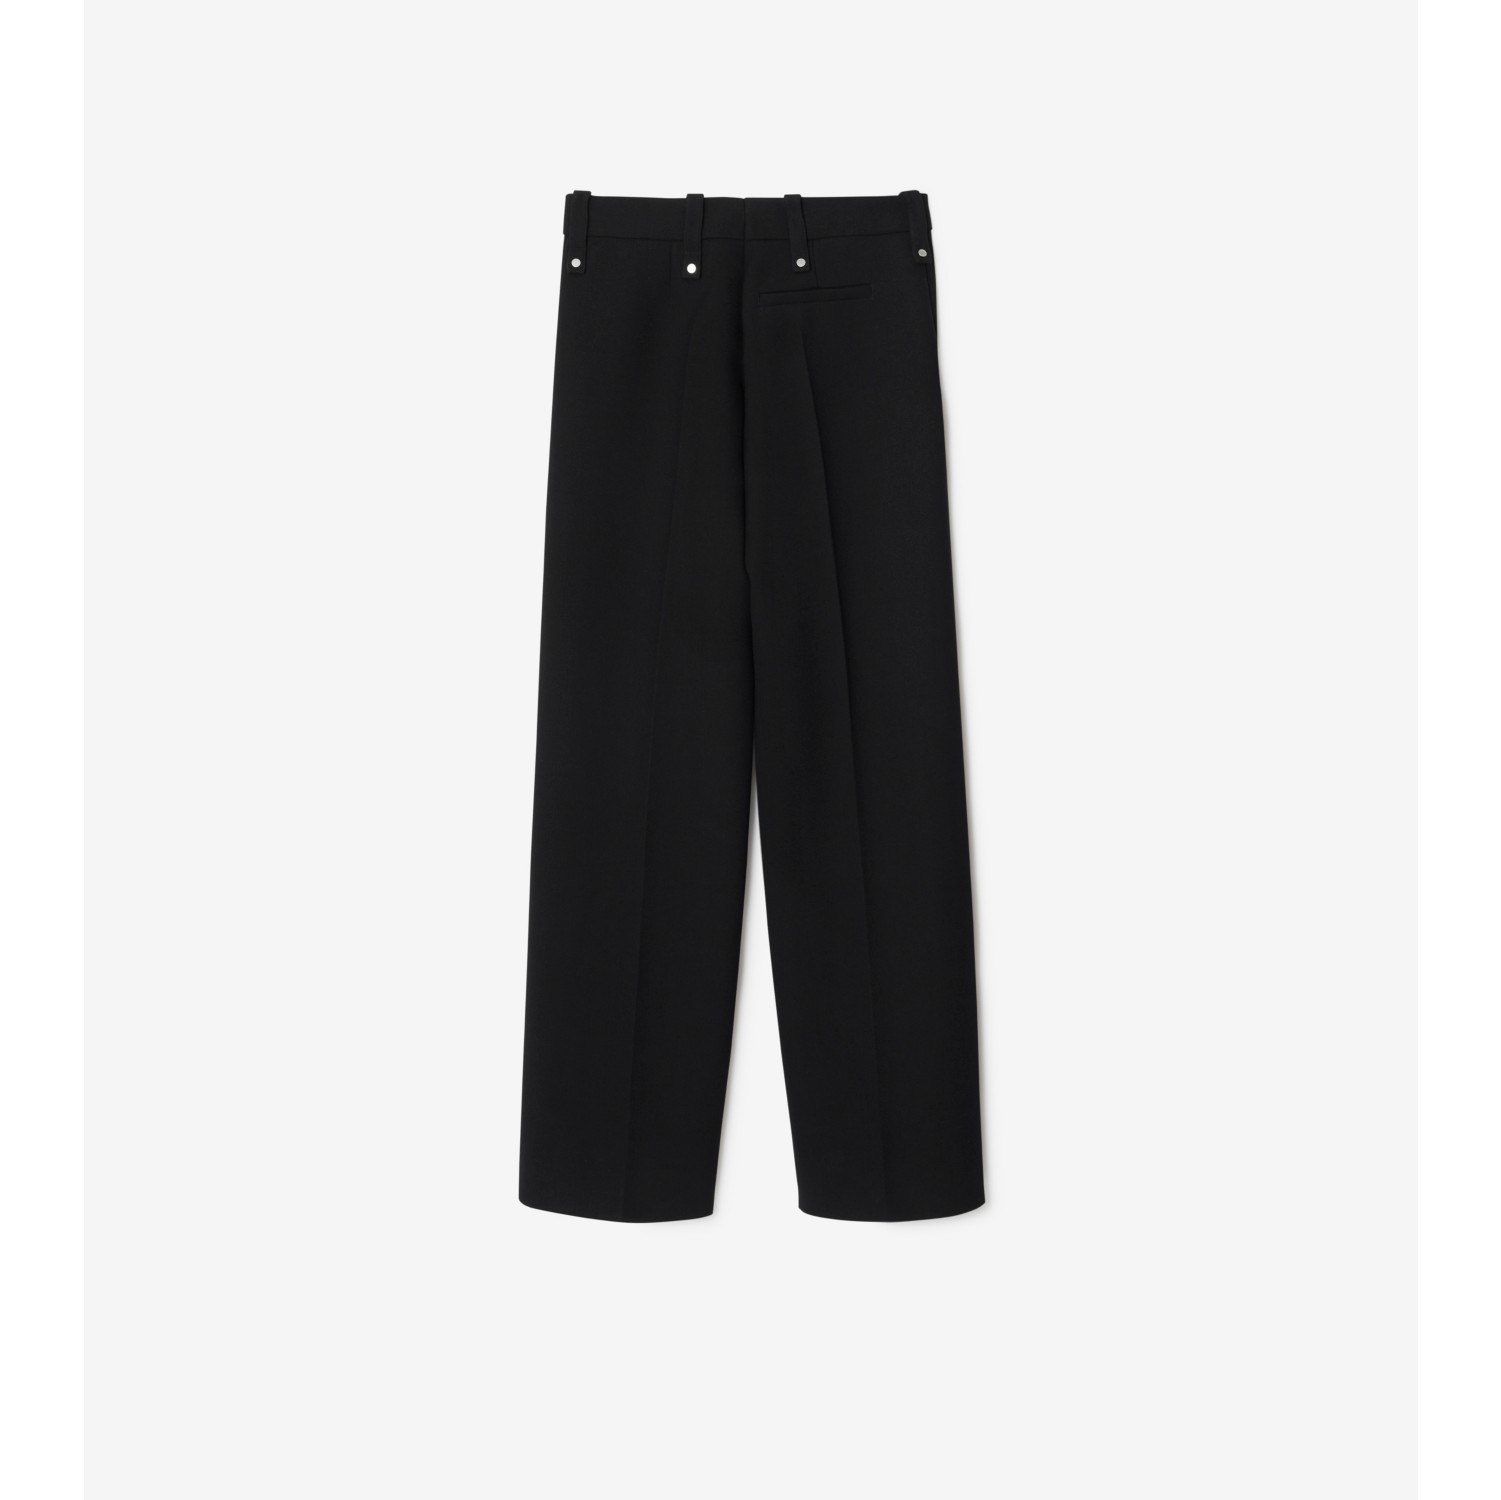 Black wool and viscose blend pants